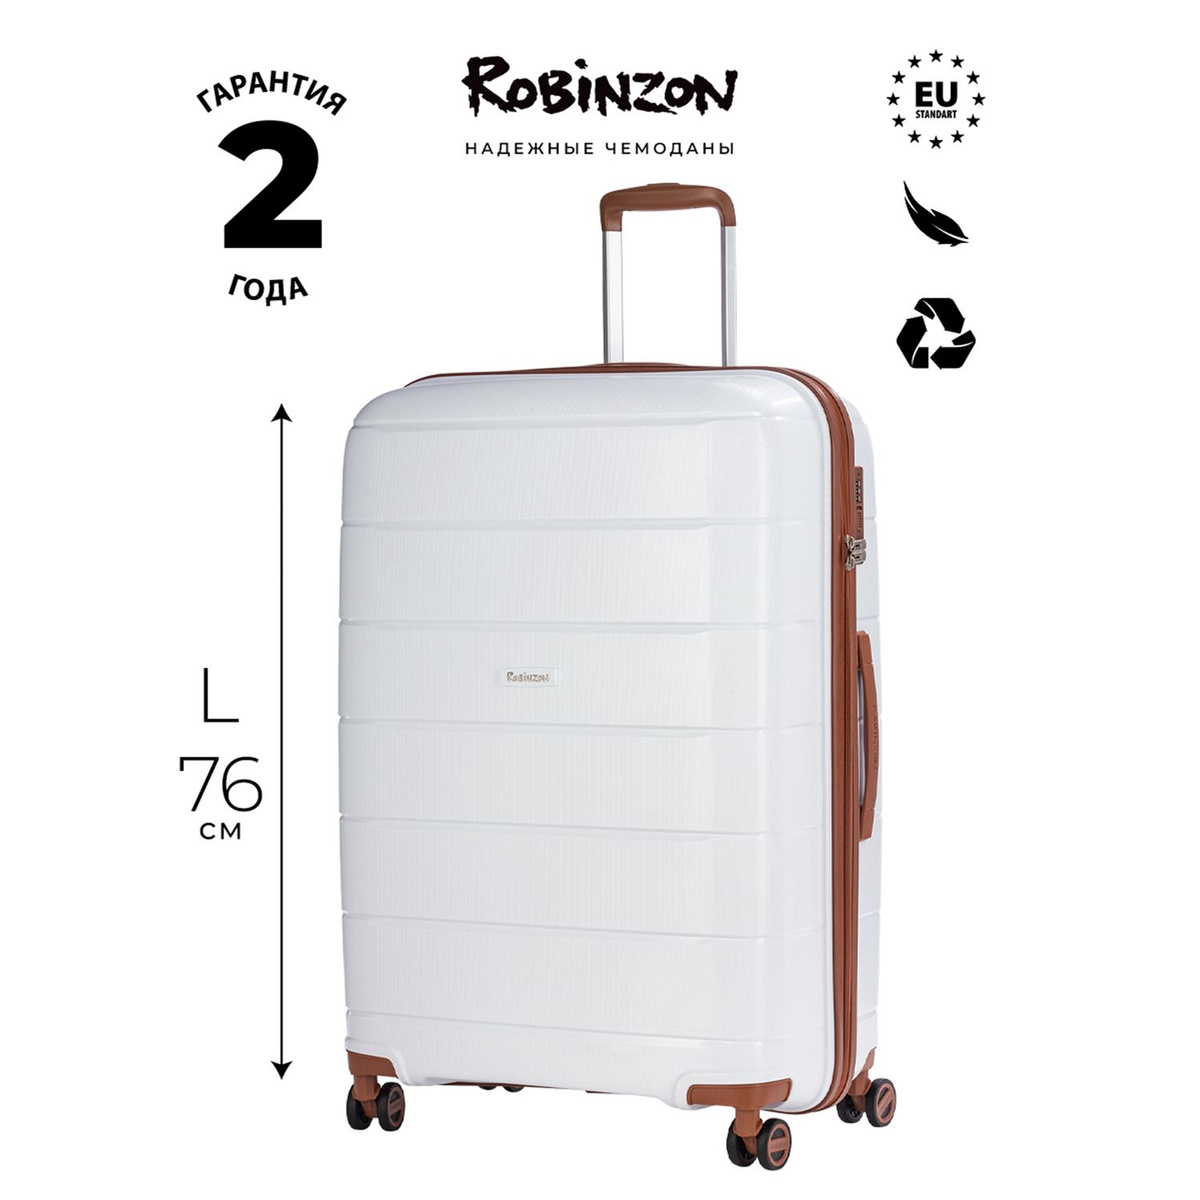 Габариты чемодана: 52x76x29 см Вес чемодана: 4,5 кг Объём чемодана: 98 л